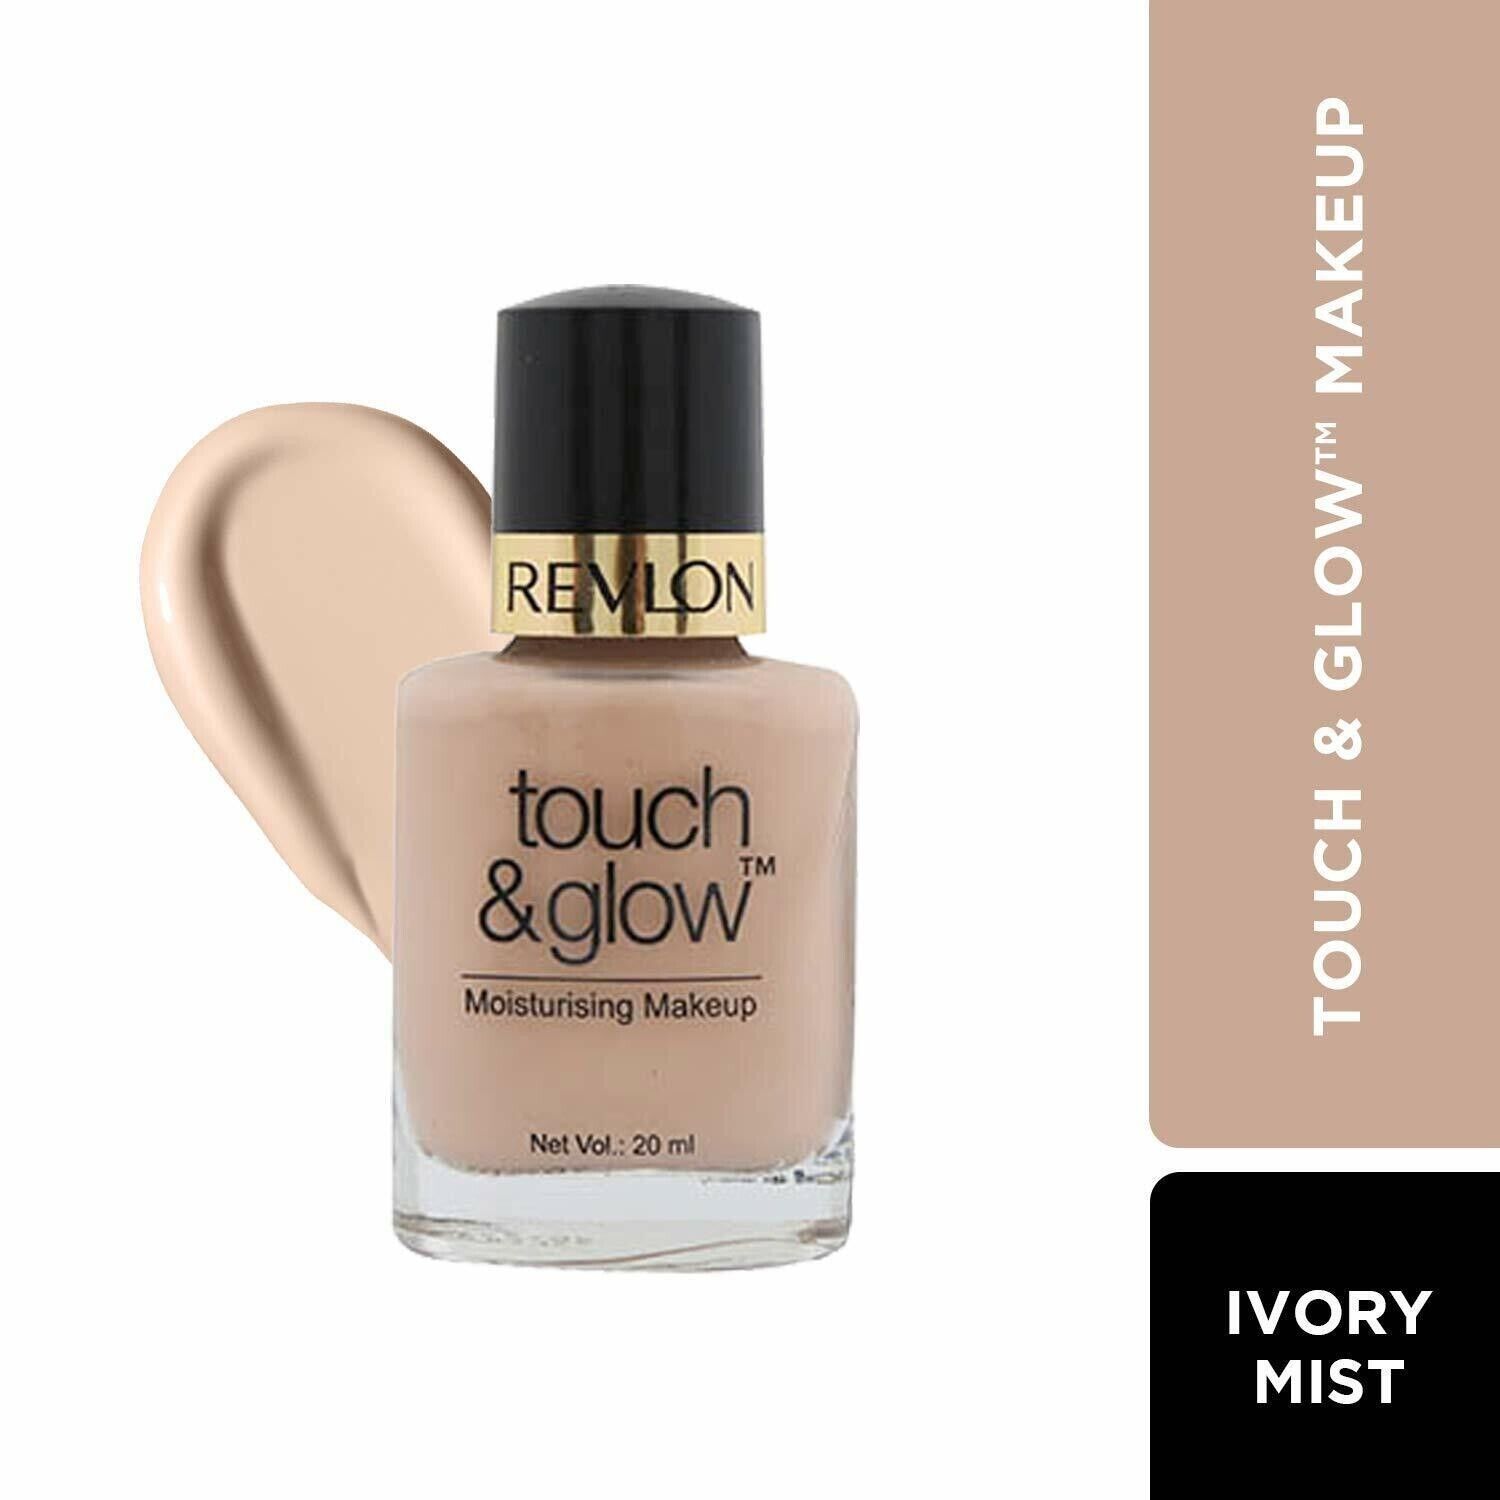 Revlon Touch and Glow Liquid Make Up, Ivory Mist, 20ml - $13.90